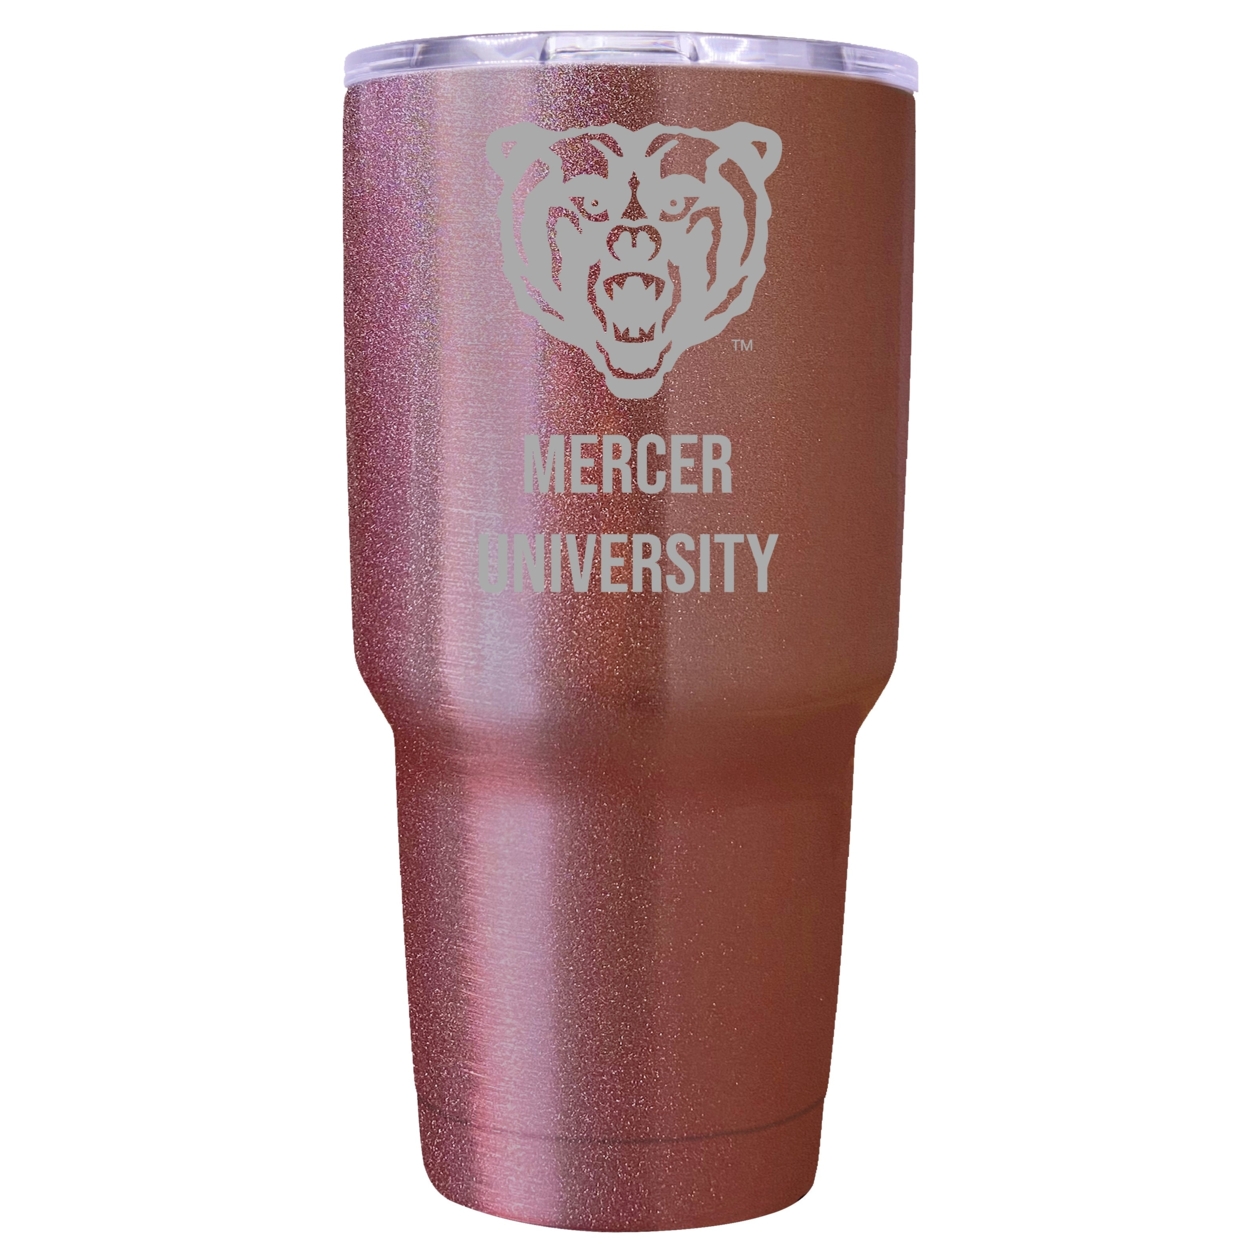 Mercer University 24 Oz Insulated Tumbler Etched - Rose Gold